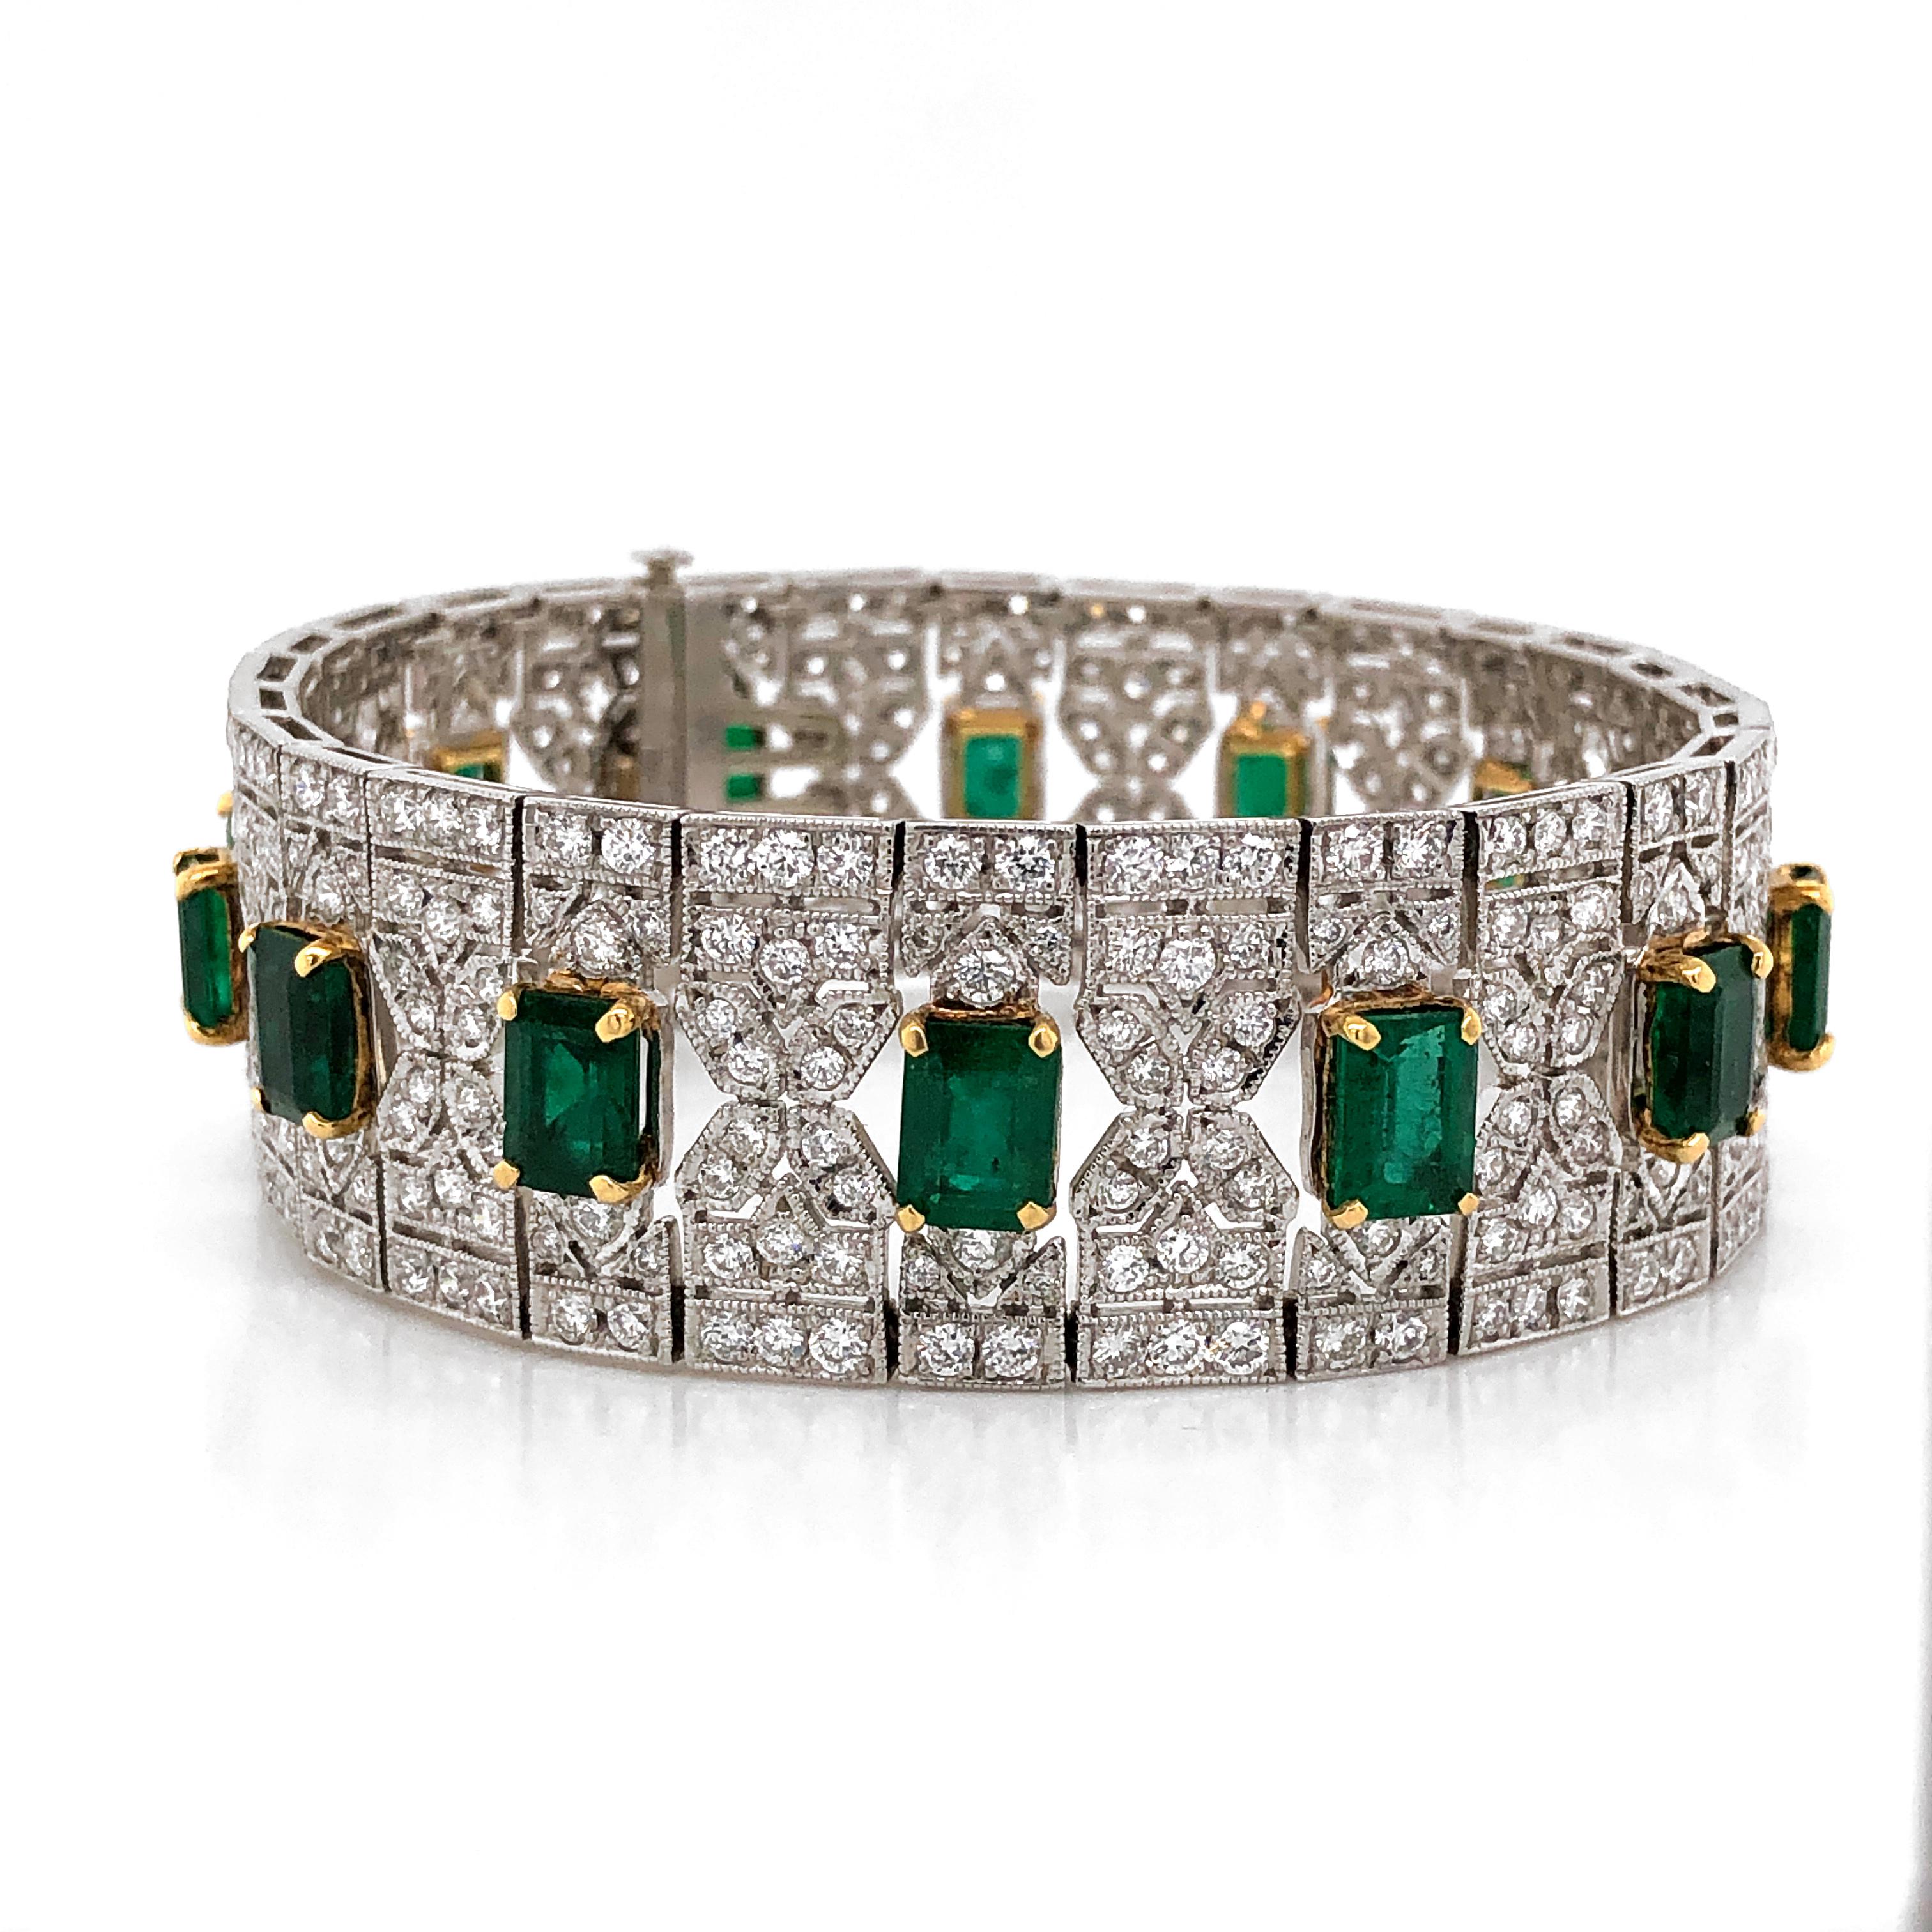 Zambian Emerald Cut Emeralds 13.14 Carat 8.26 Carat Diamond Platinum Bracelet In New Condition For Sale In New York, NY